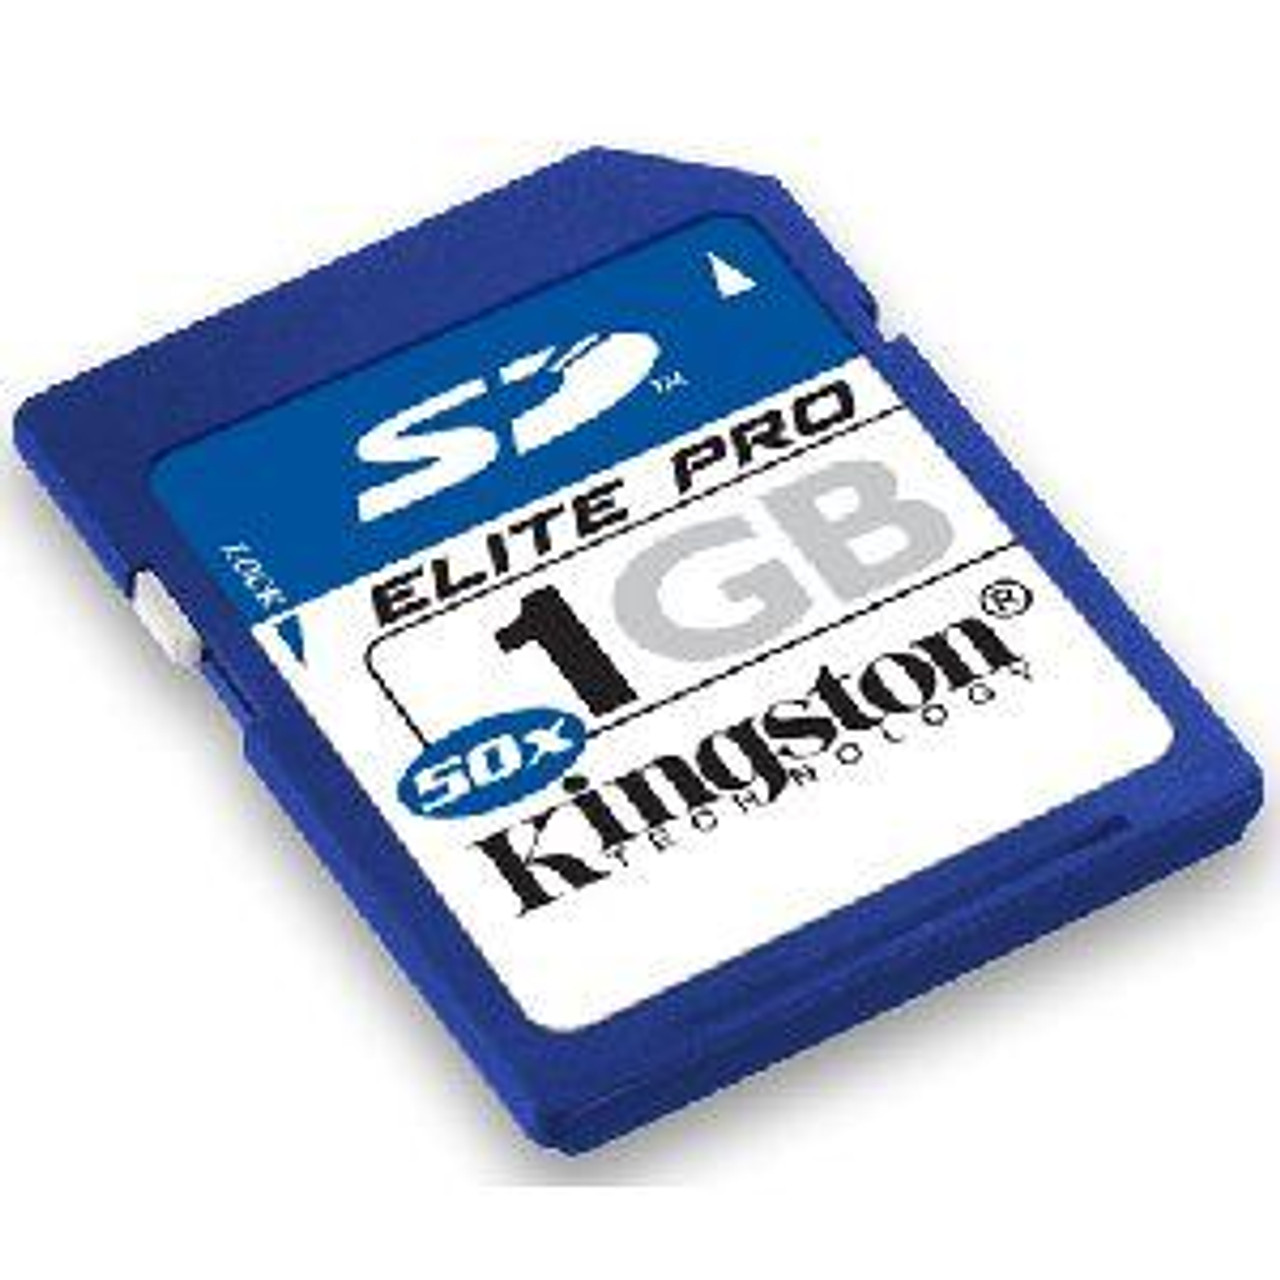 Sd s f. Kingston 1 GB SD. Карта памяти "SD Kingston" 1gb. Secure Digital SD 1 GB. Карта Compact Flash Card 1 GBKINGSTON Elite Pro 50 x.